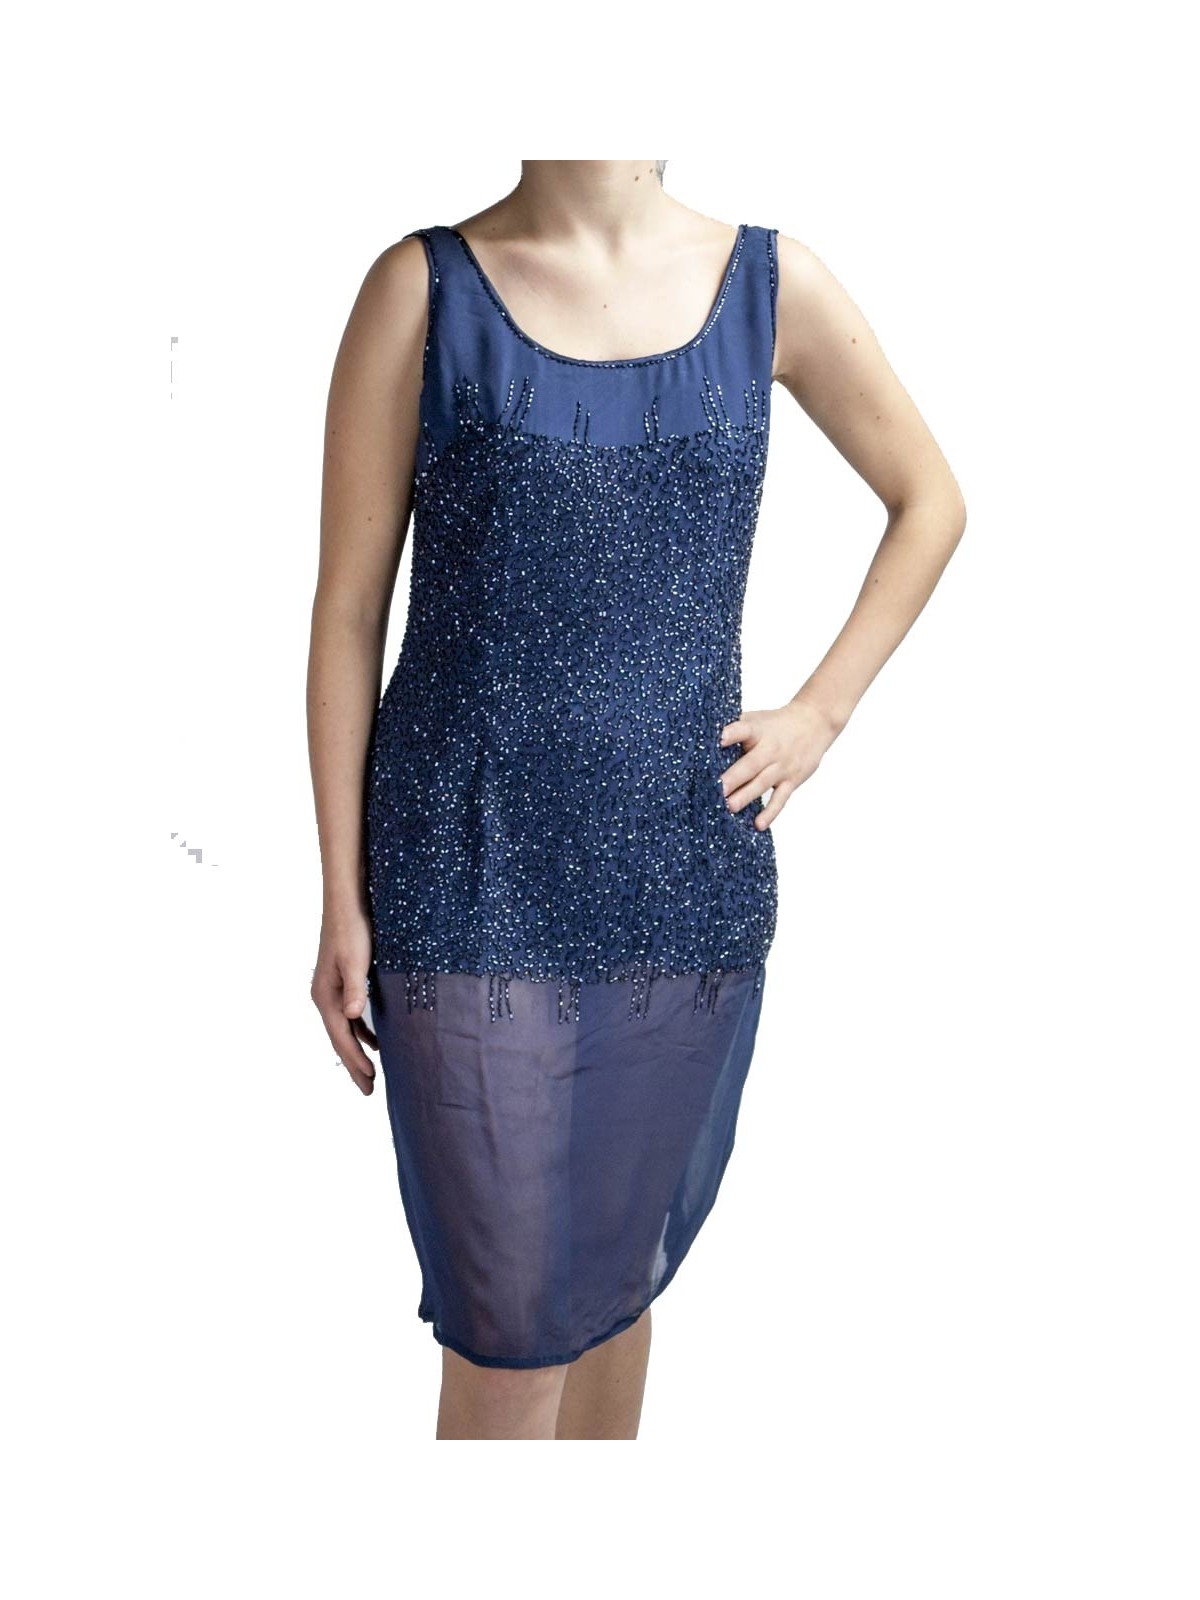 Elegante dames schede jurk M blauw - bezaaid met semi-transparante kralen